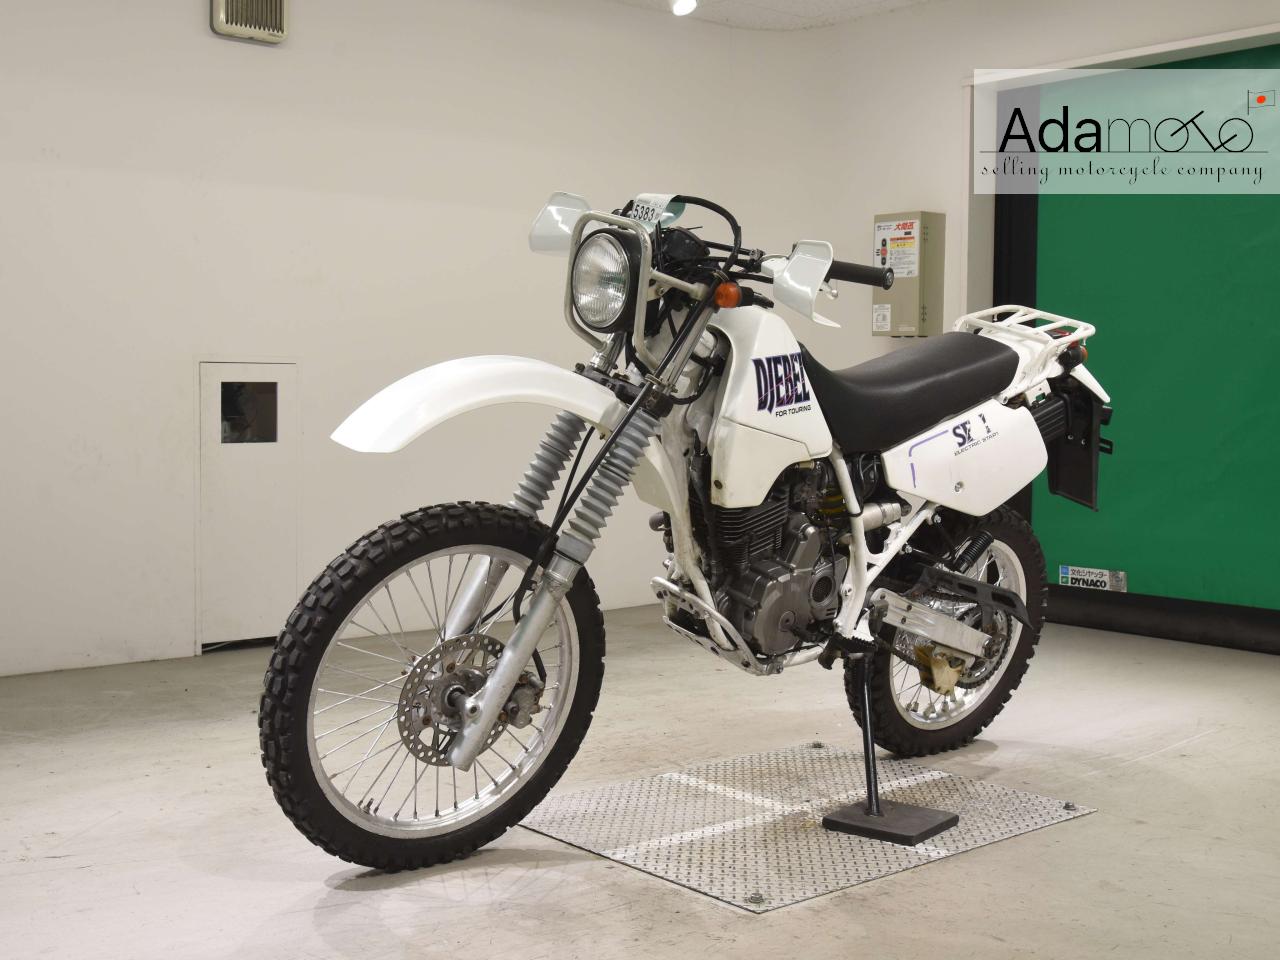 Suzuki DJEBEL250 - Adamoto - Motorcycles from Japan